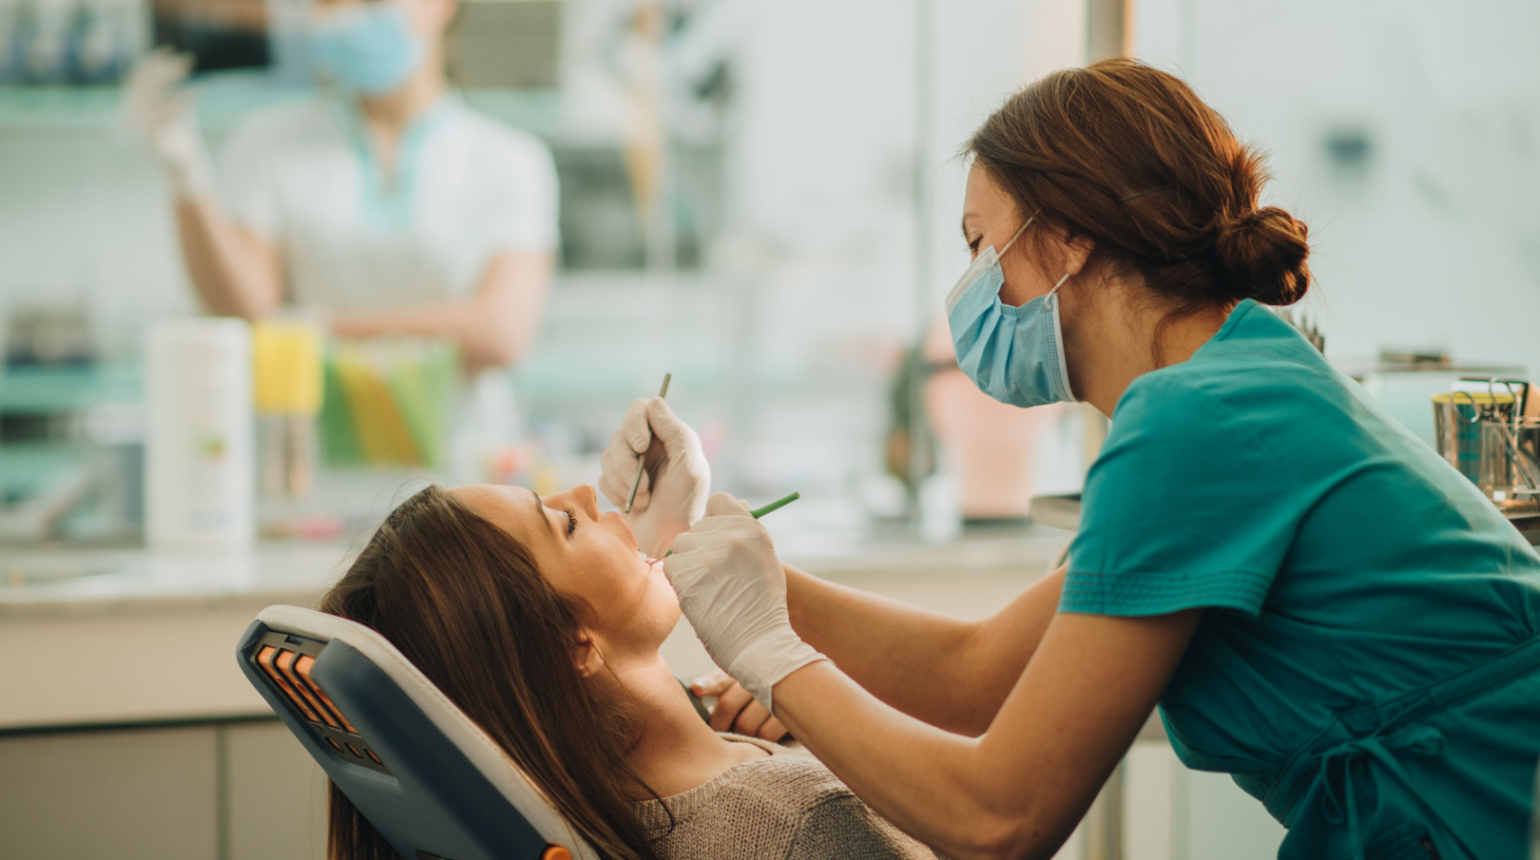 Dentist looking at patient's teeth